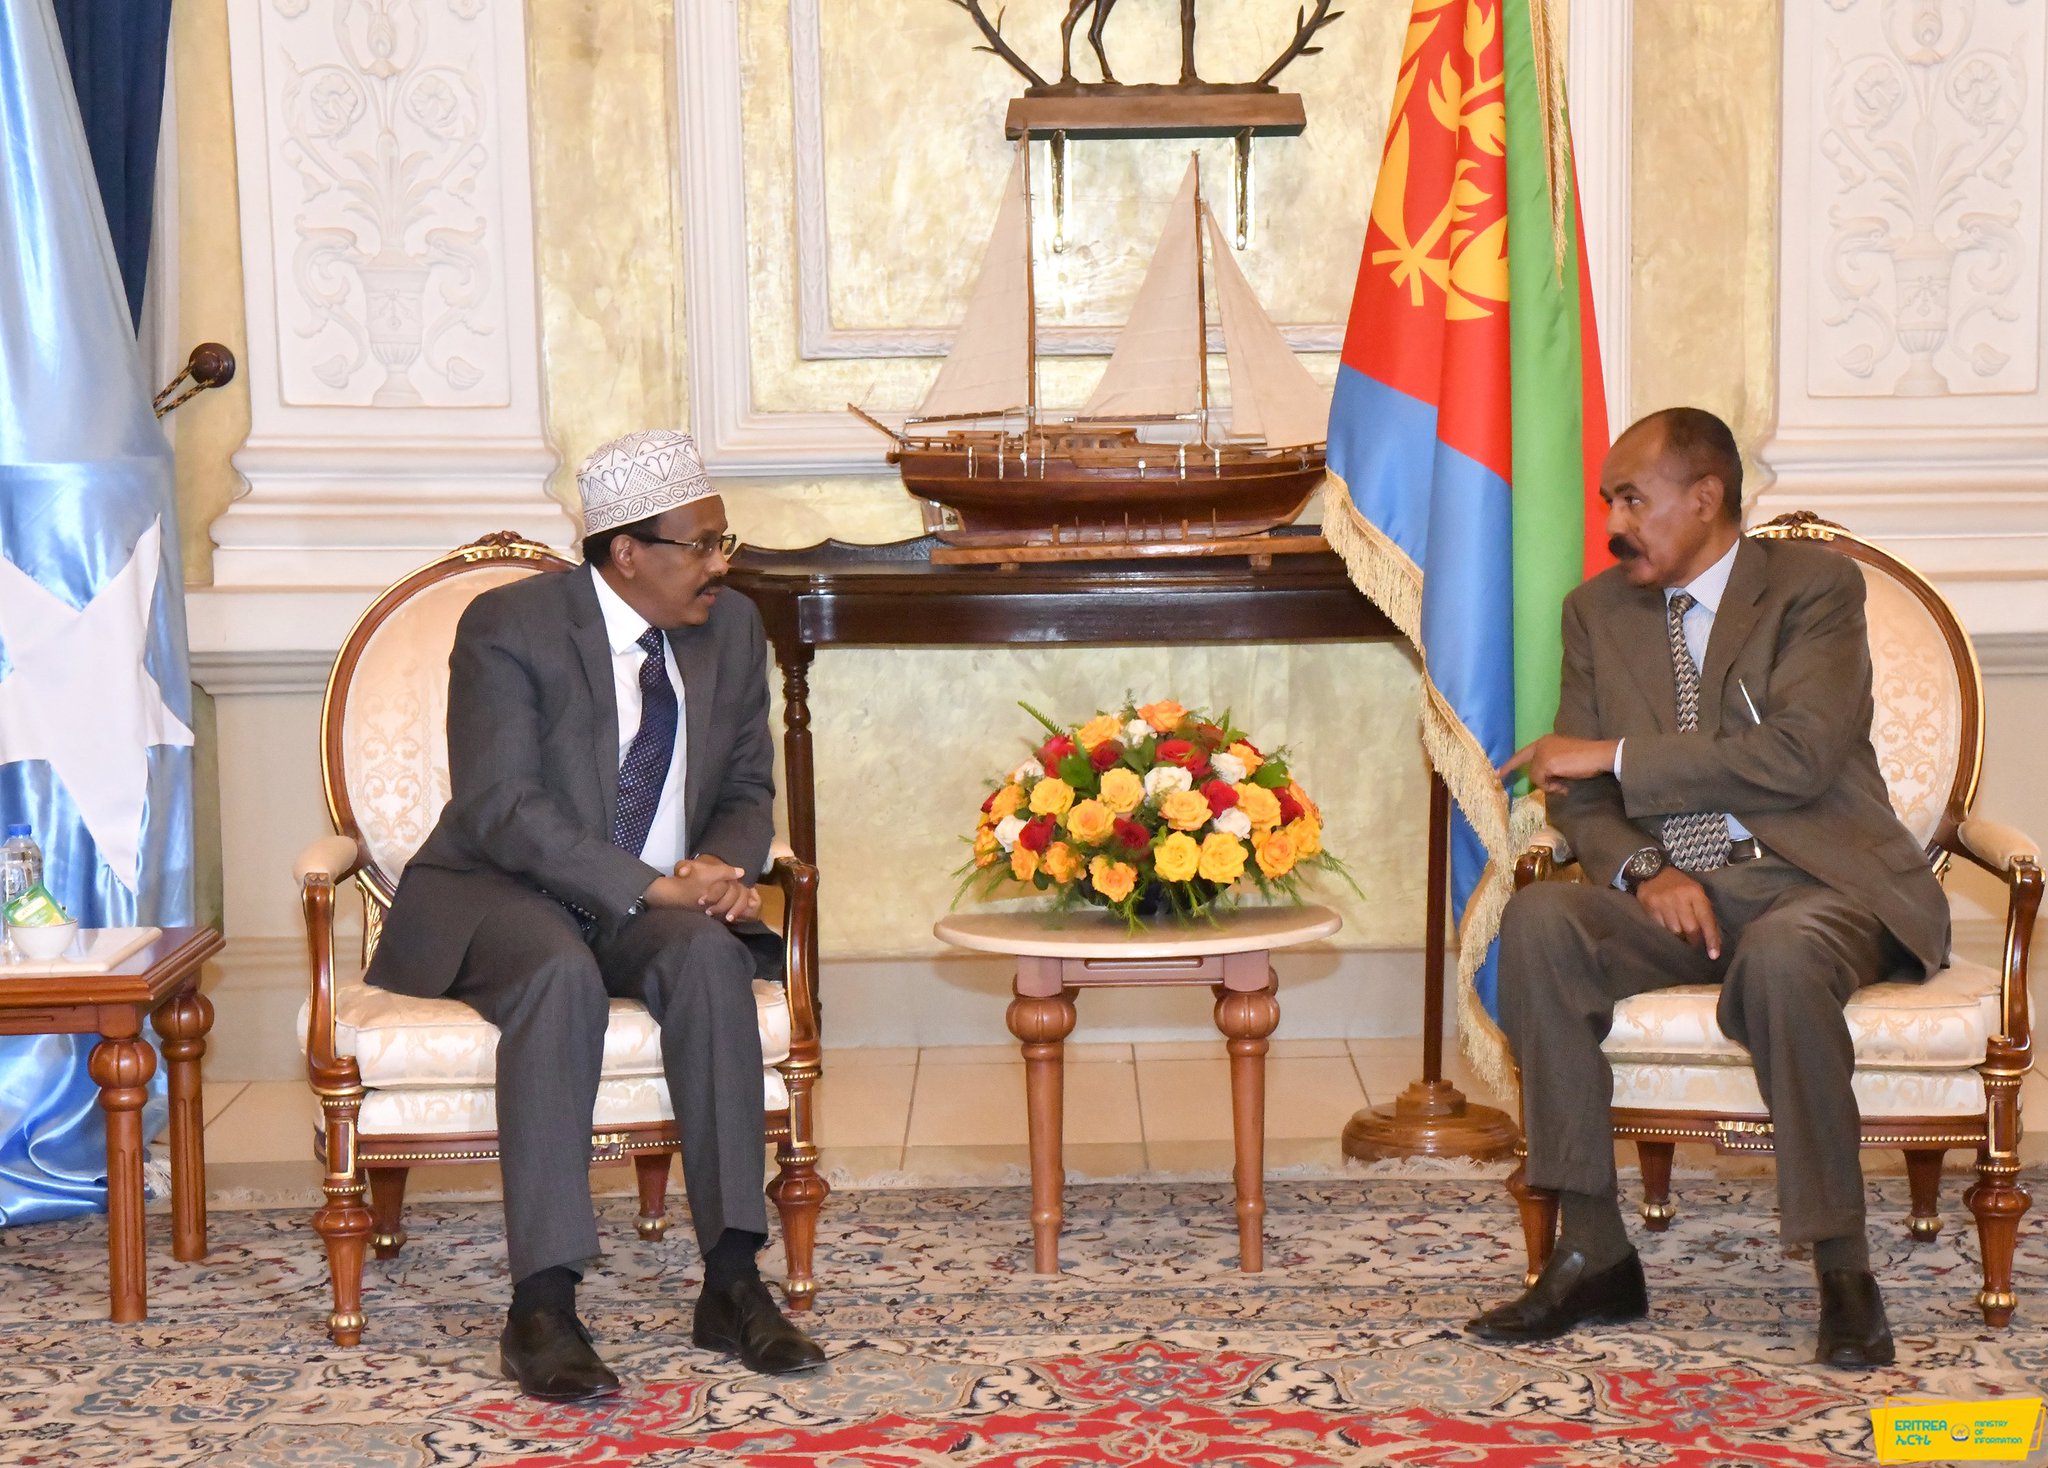 Eritrea: Somali Leader arrived in Asmara, discuss progress of bilateral ties